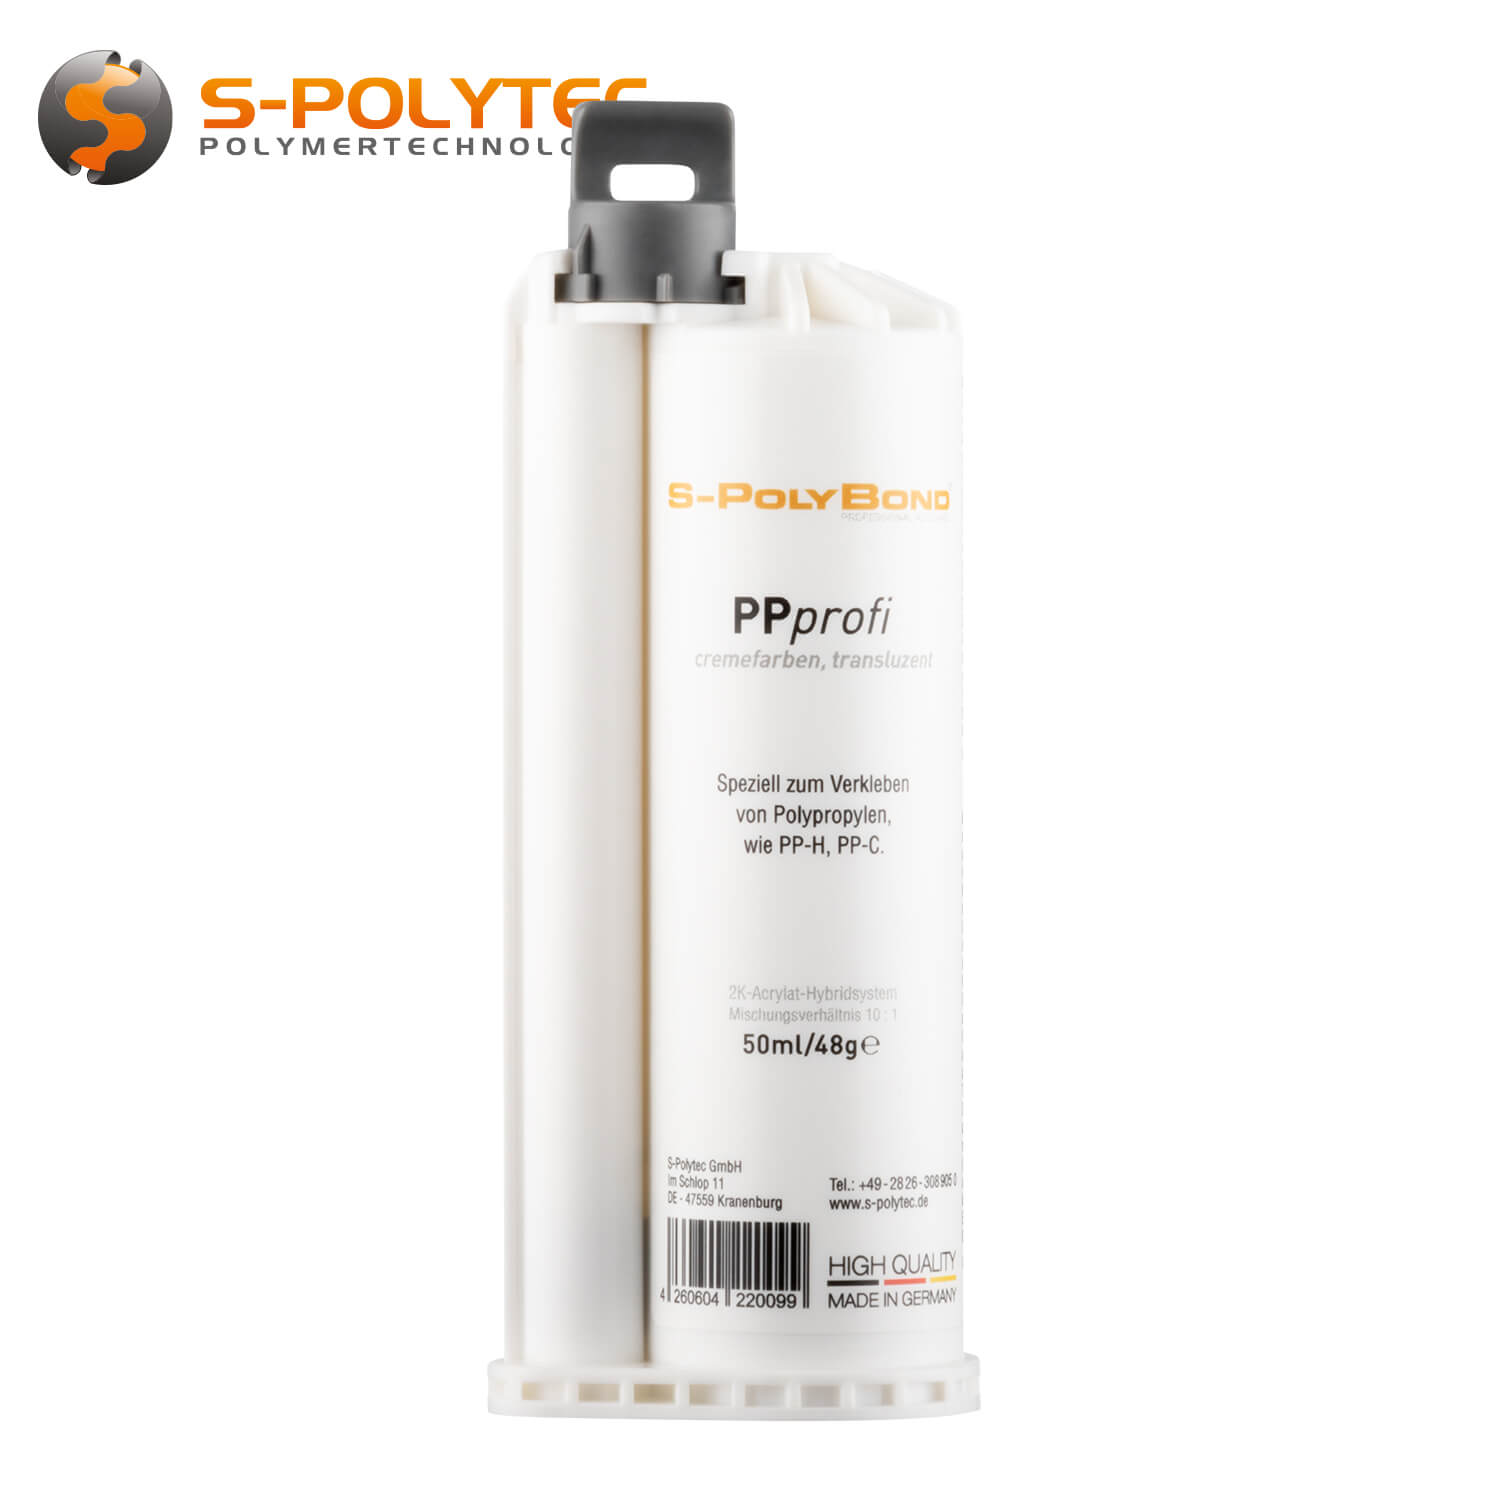 Polypropylene adhesive - PPprofi 50ml for bonding PP-H and PP-C